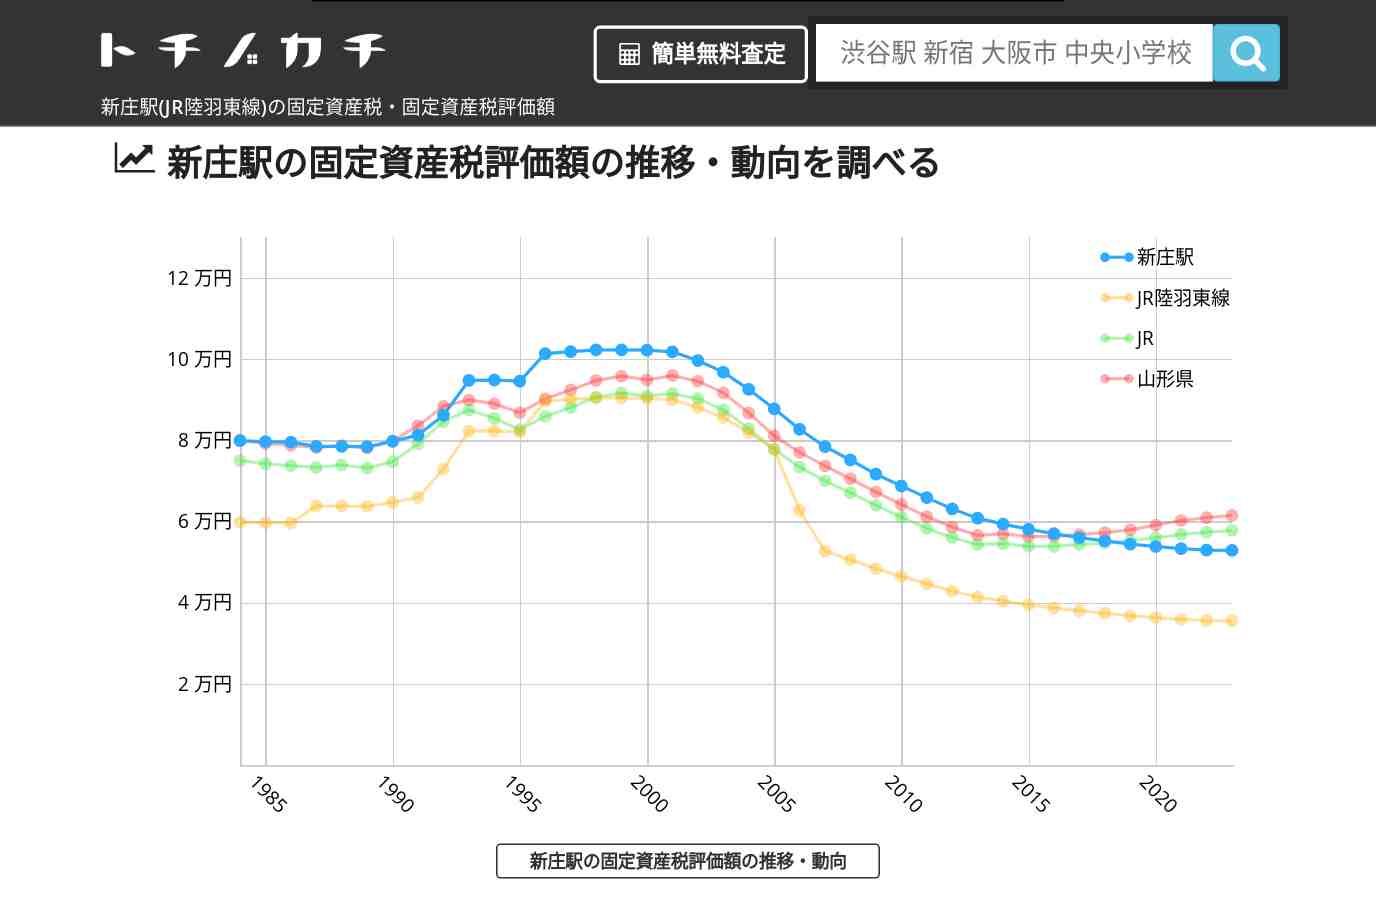 新庄駅(JR陸羽東線)の固定資産税・固定資産税評価額 | トチノカチ